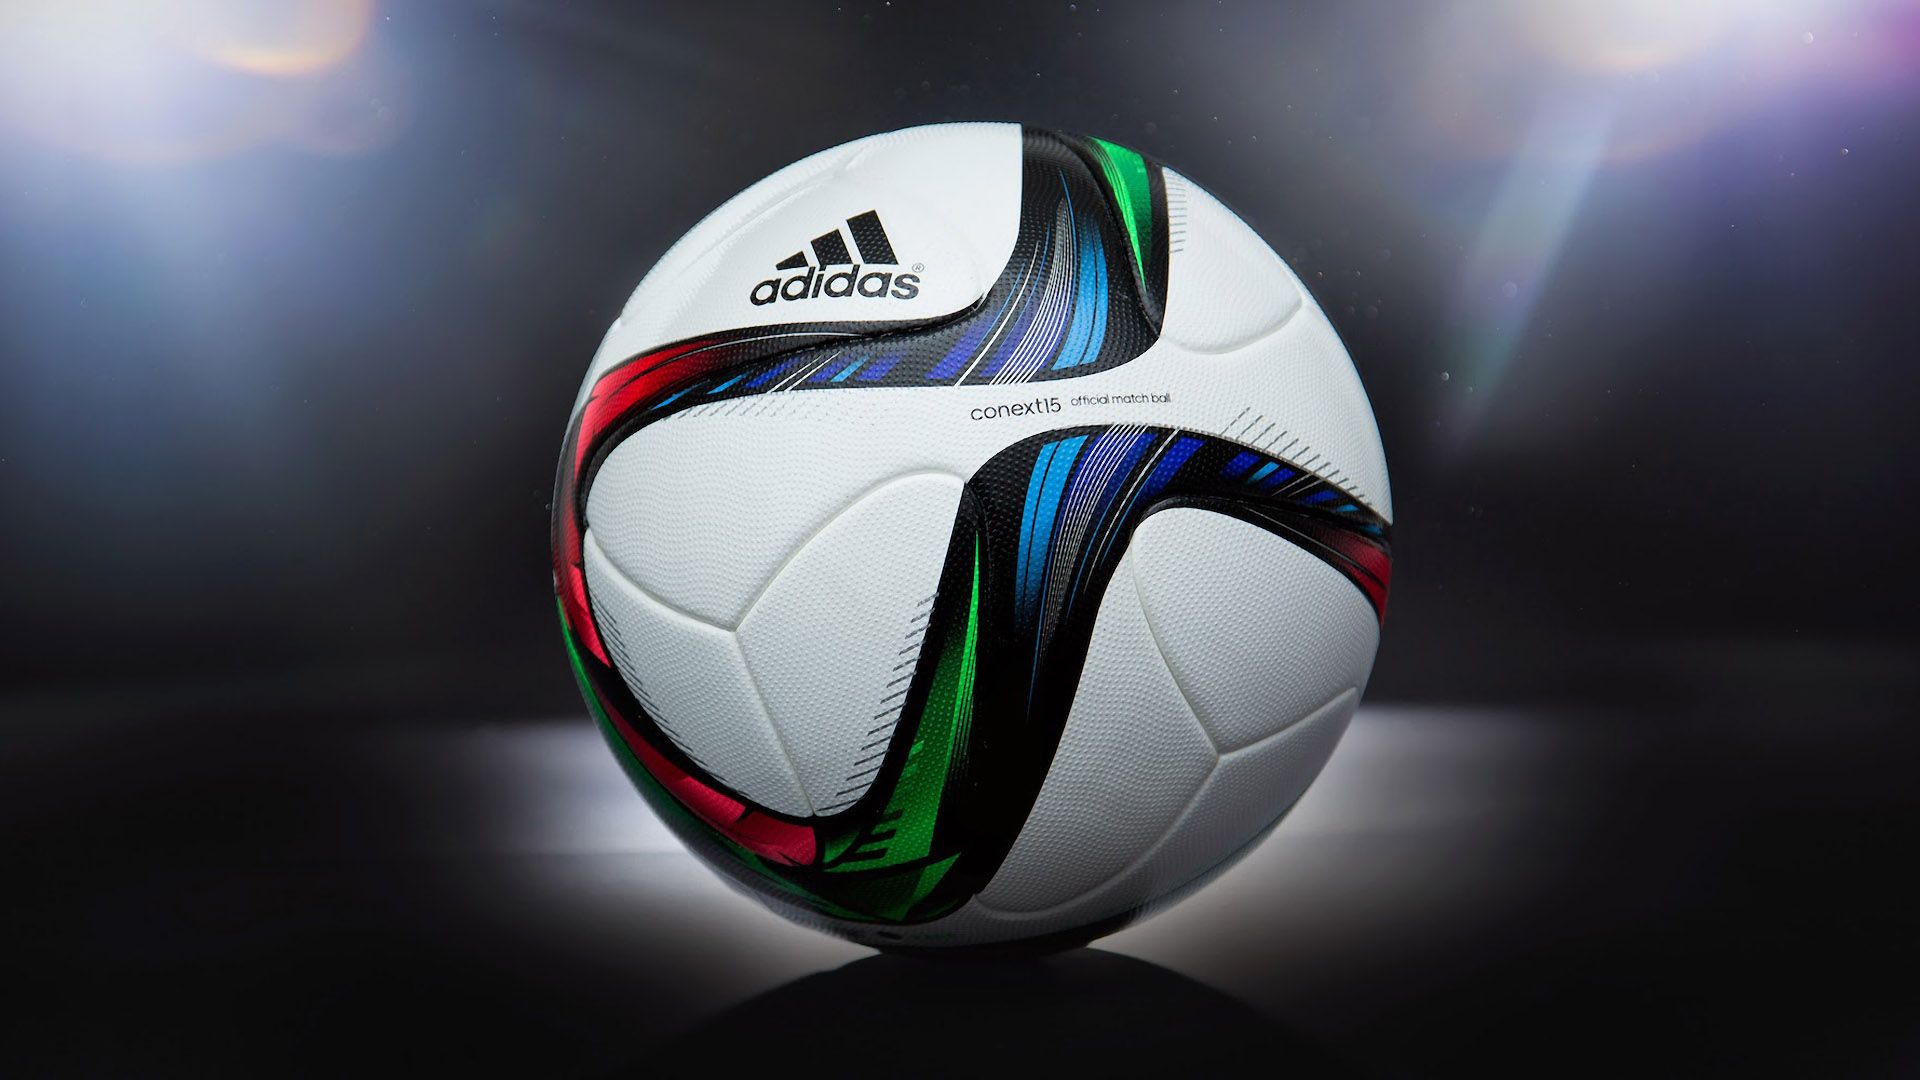 Adidas Soccer Ball Wallpaper HD 61936 1920x1080px